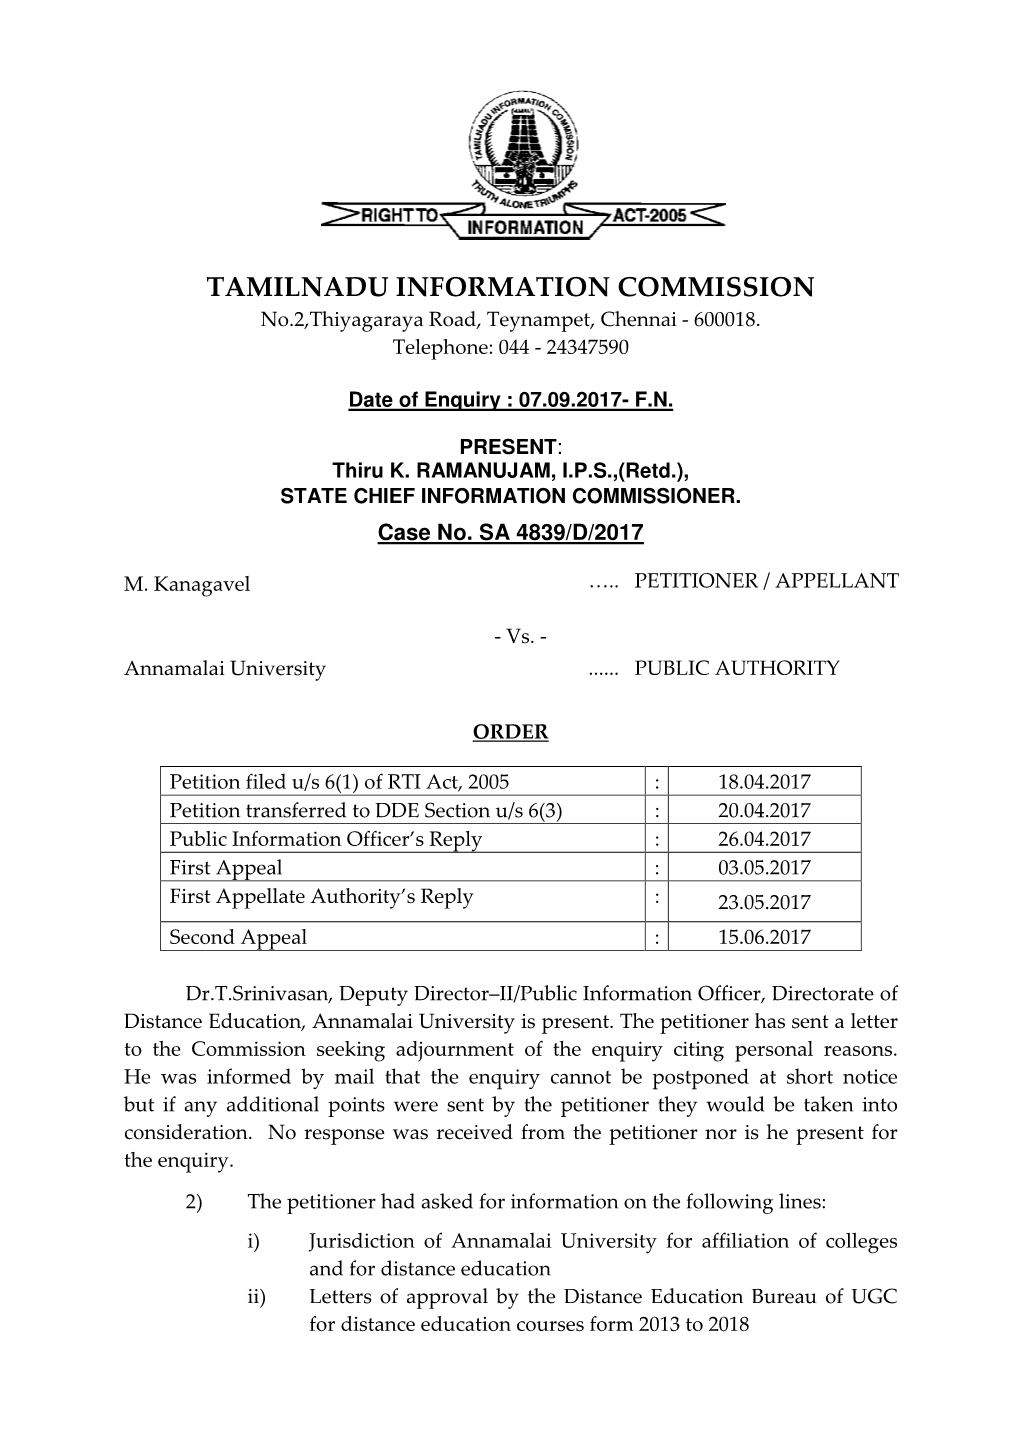 TAMILNADU INFORMATION COMMISSION No.2,Thiyagaraya Road, Teynampet, Chennai - 600018